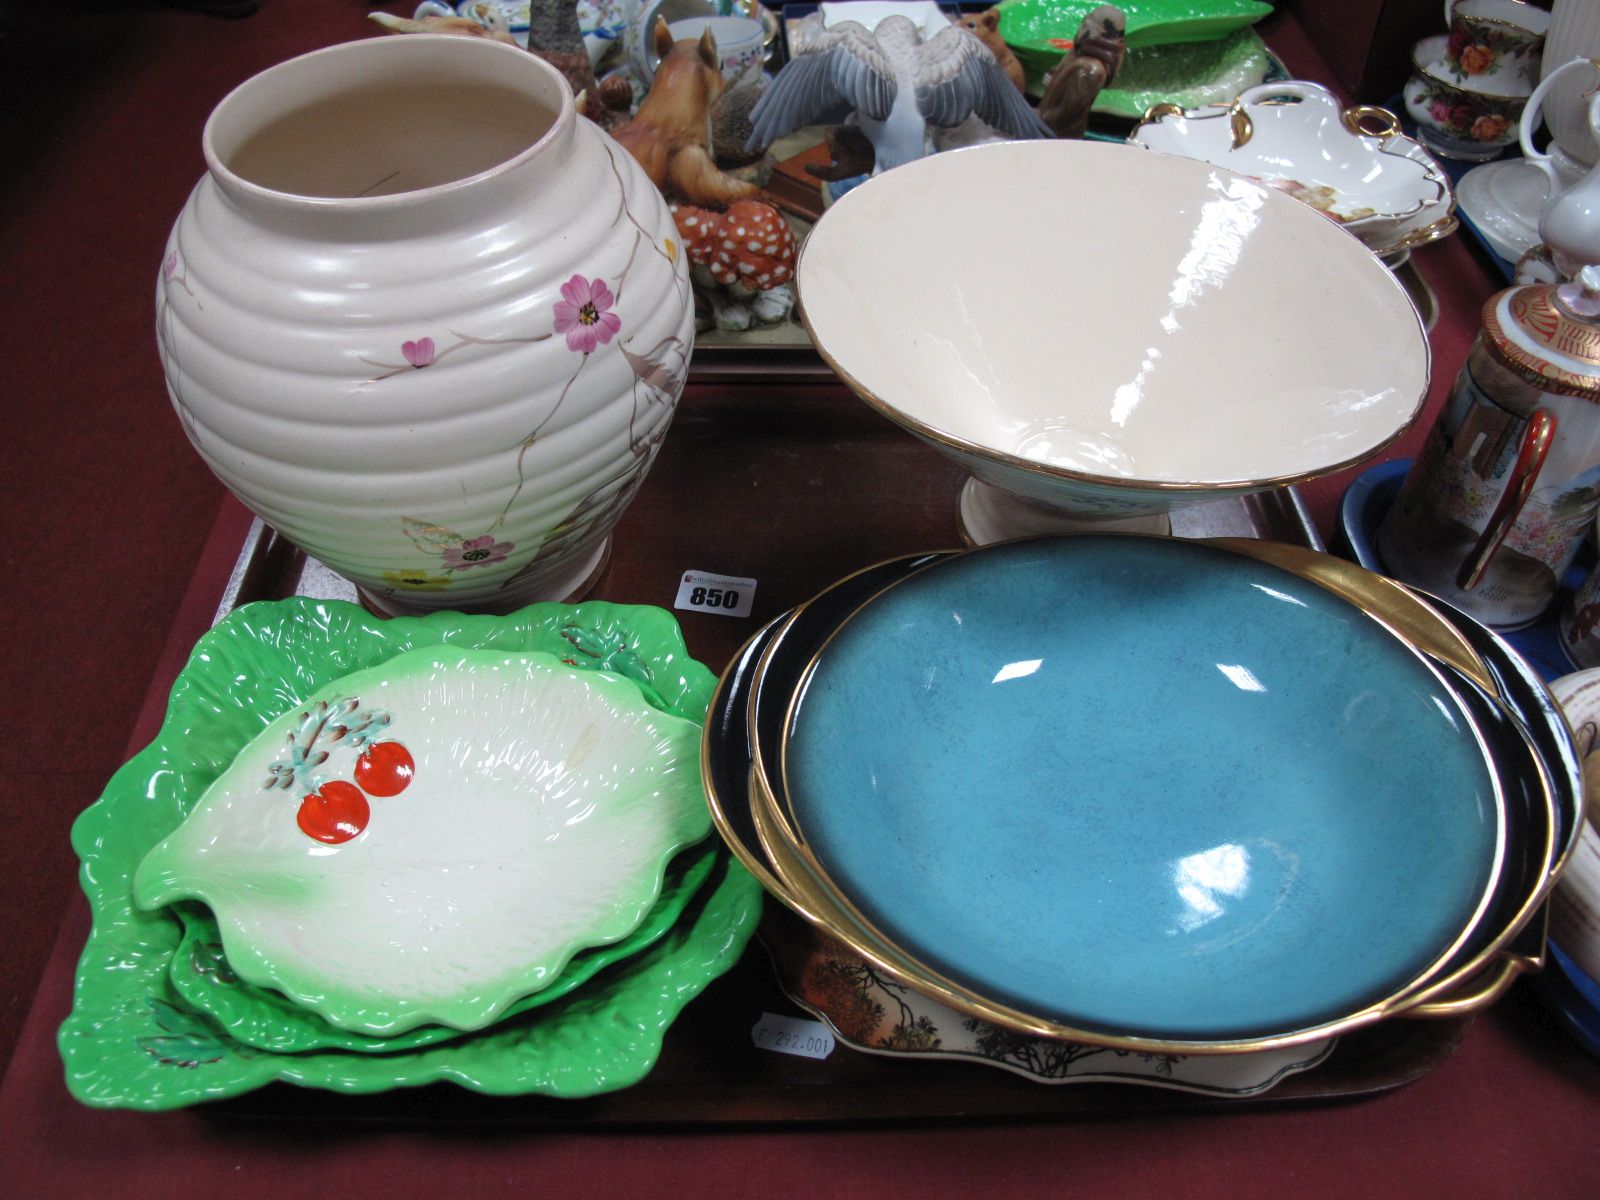 Carlton "Bleu Royale" and Beswick Salad Dishes, Kensington conical bowl and vase:- One Tray